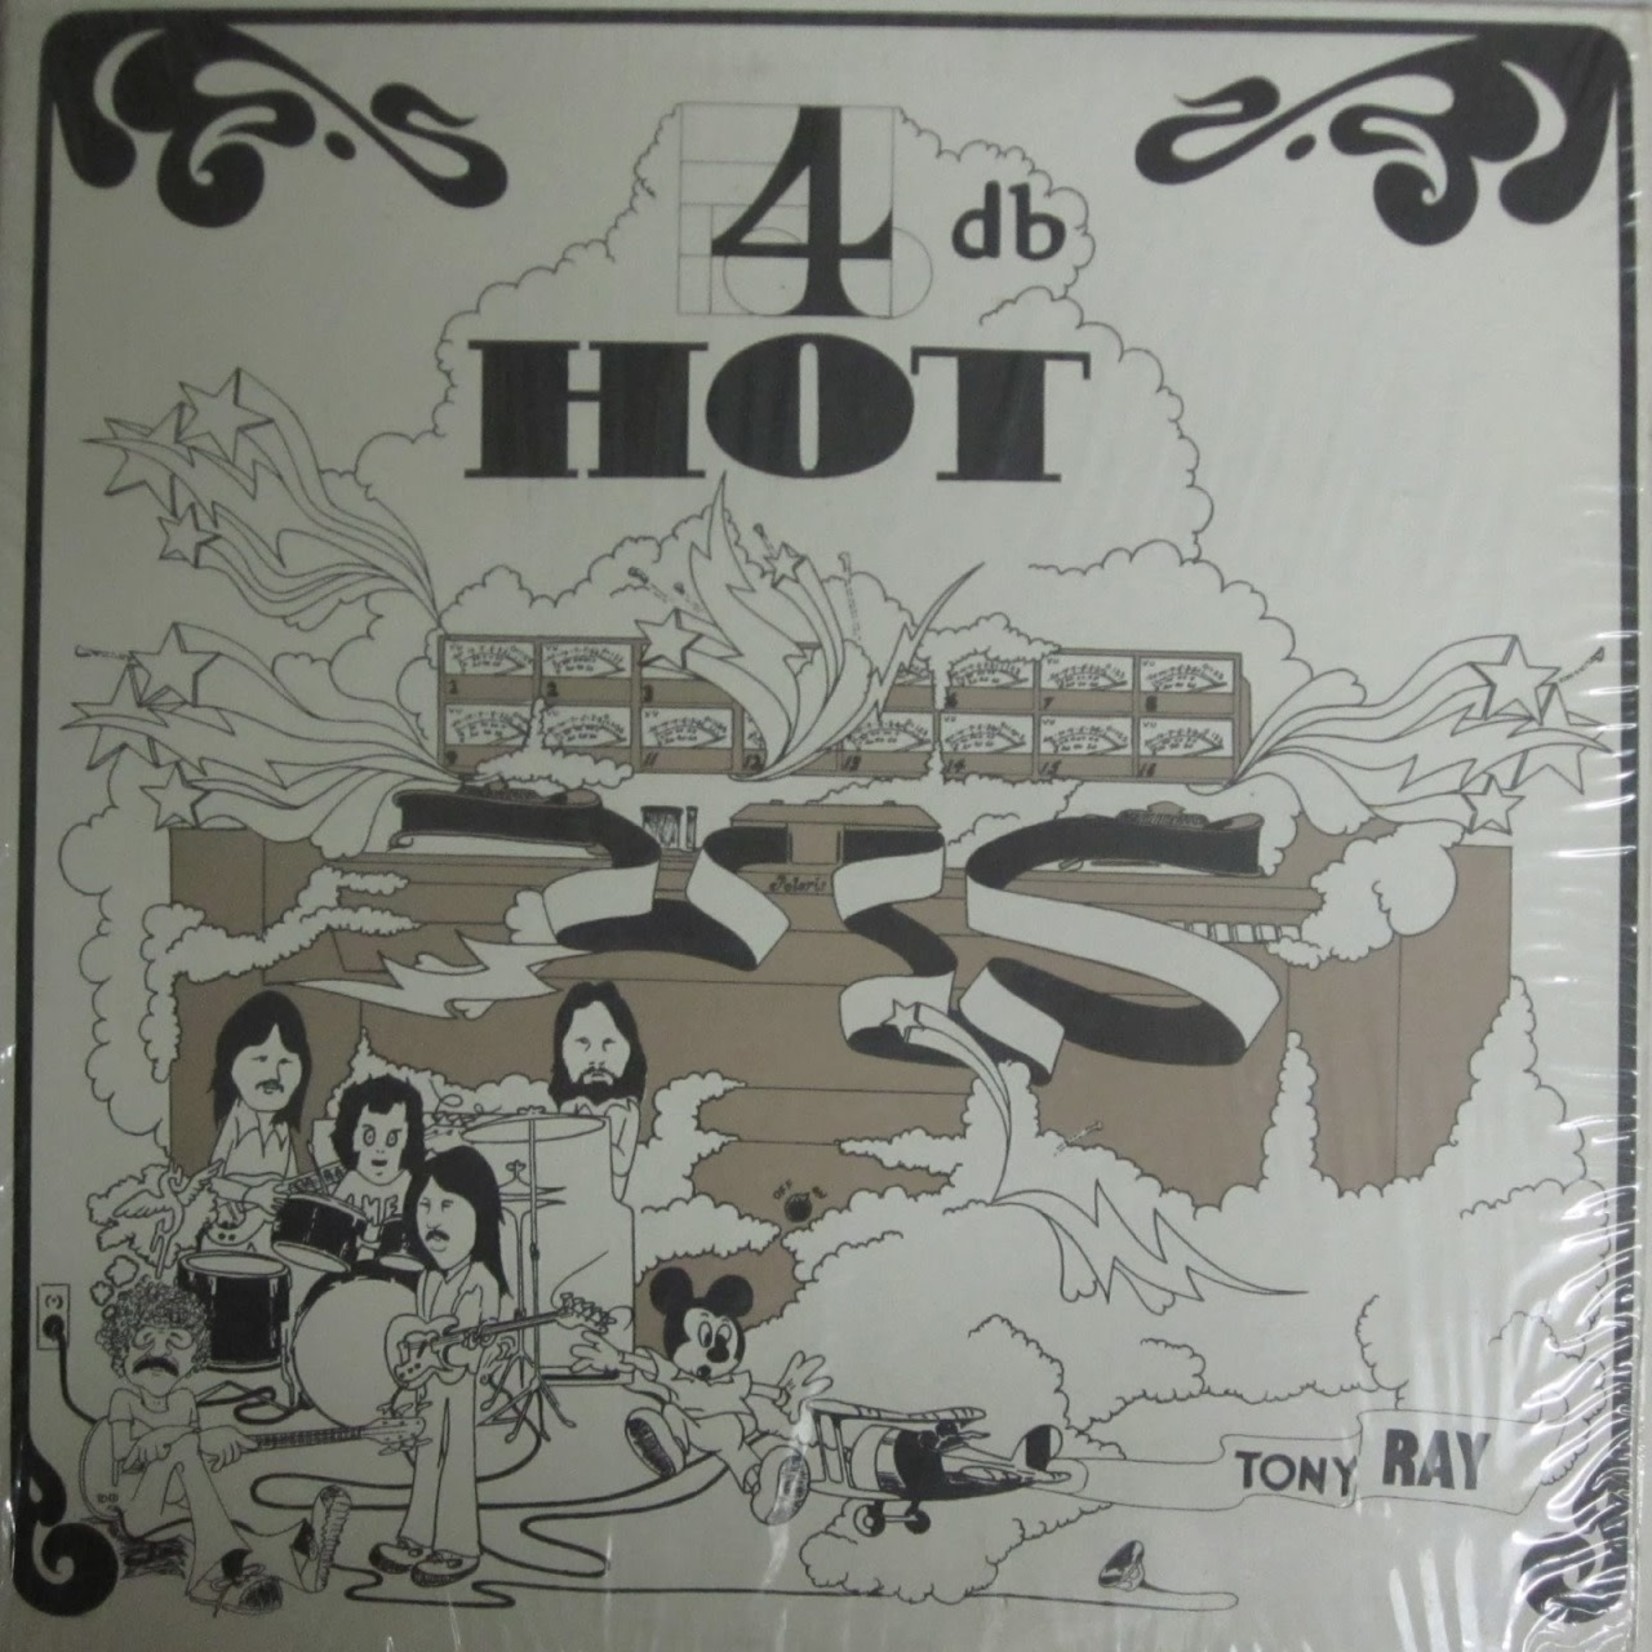 Tony Ray - 4 db Hot (LP) {VG+/VG+}